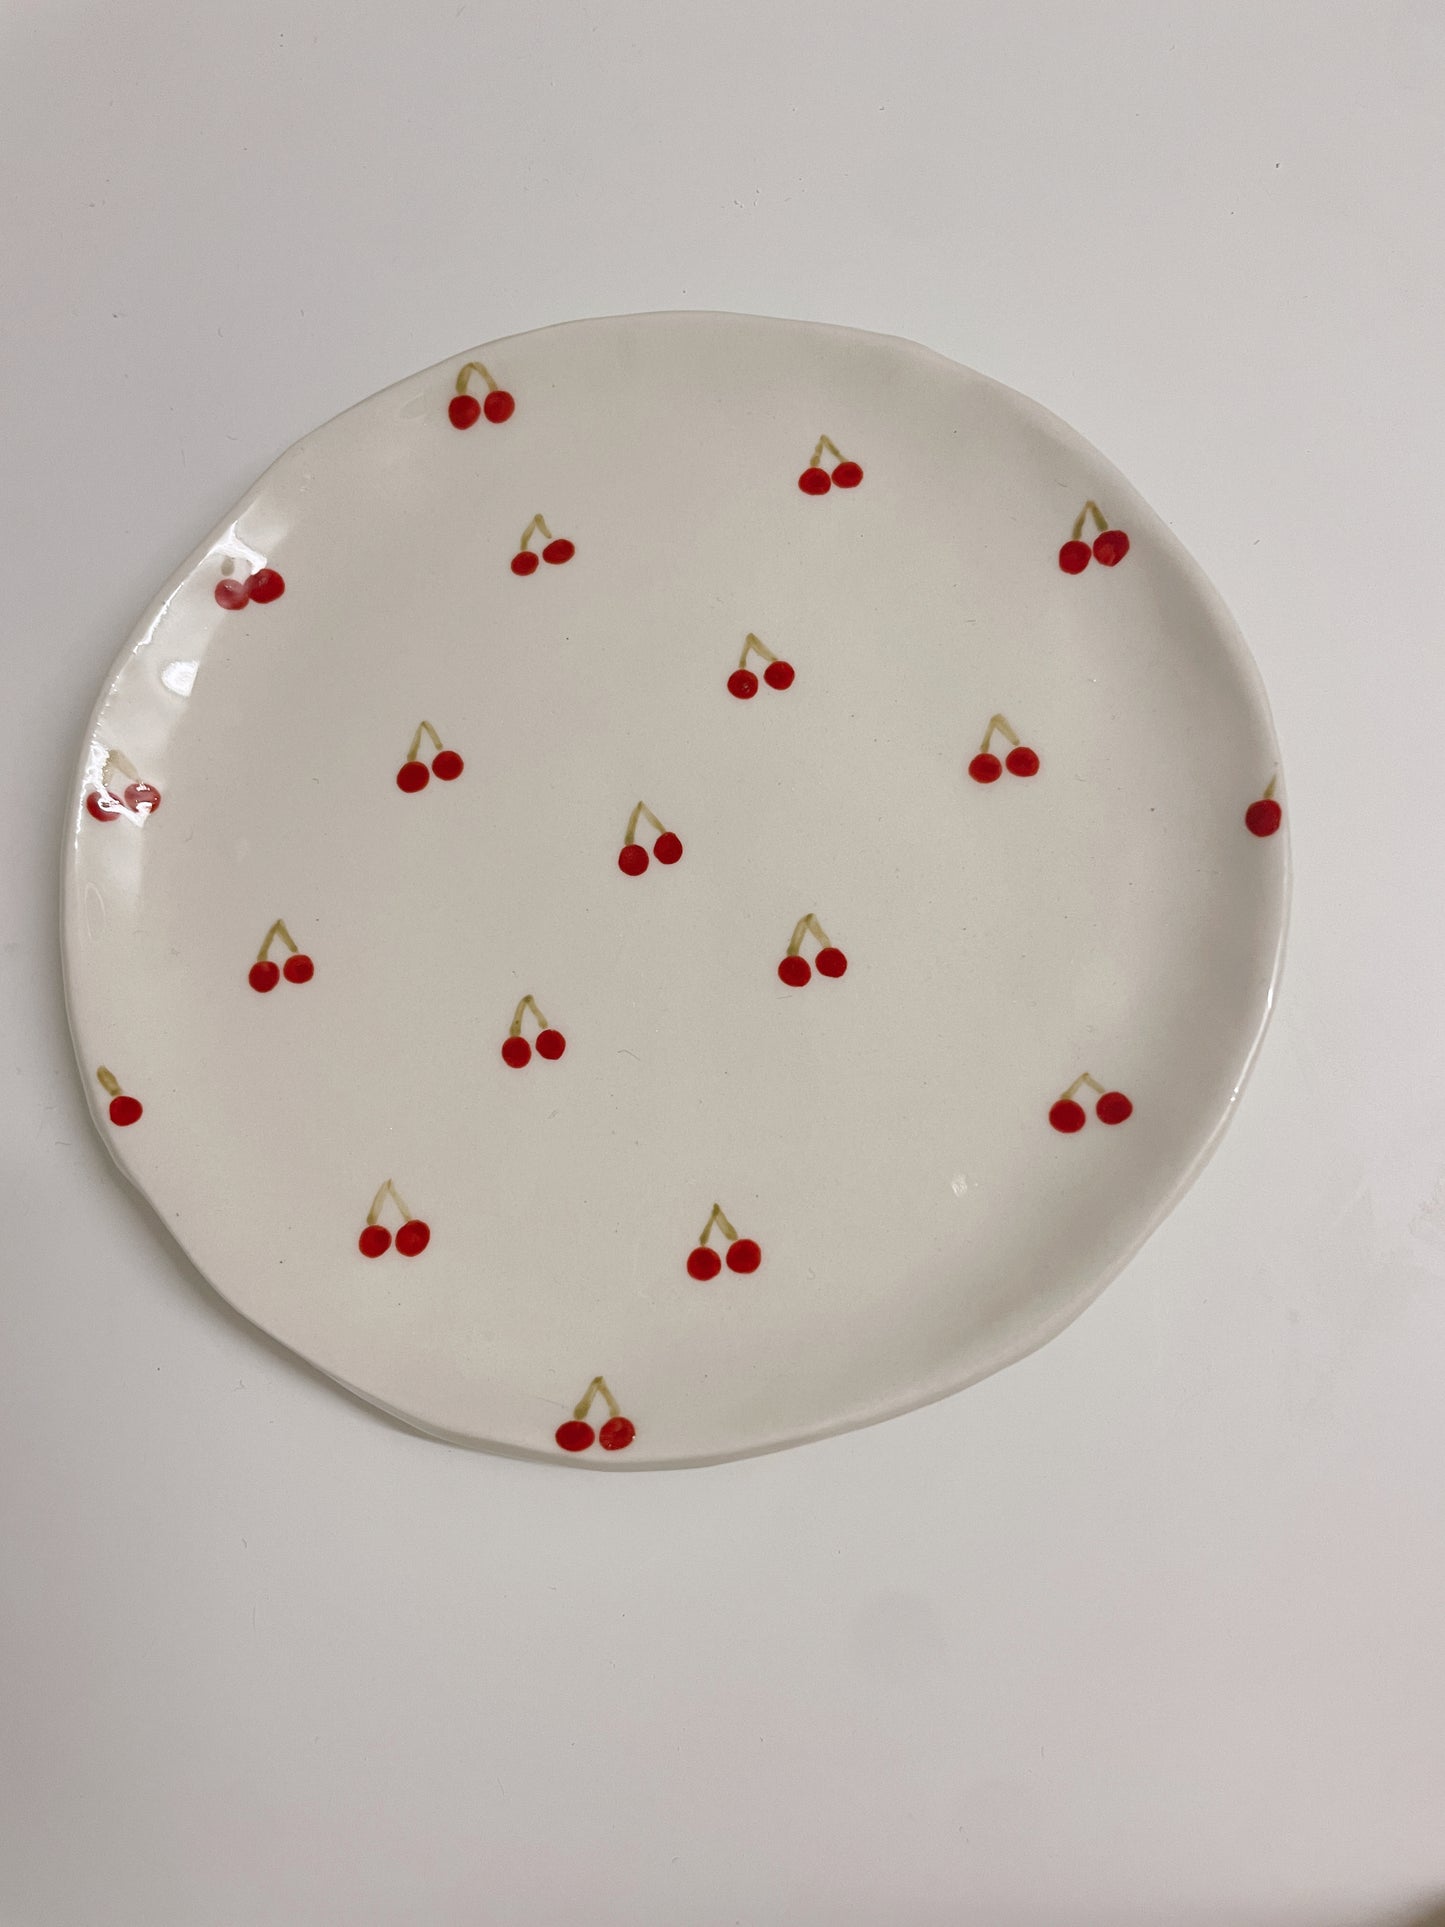 Cherry plate